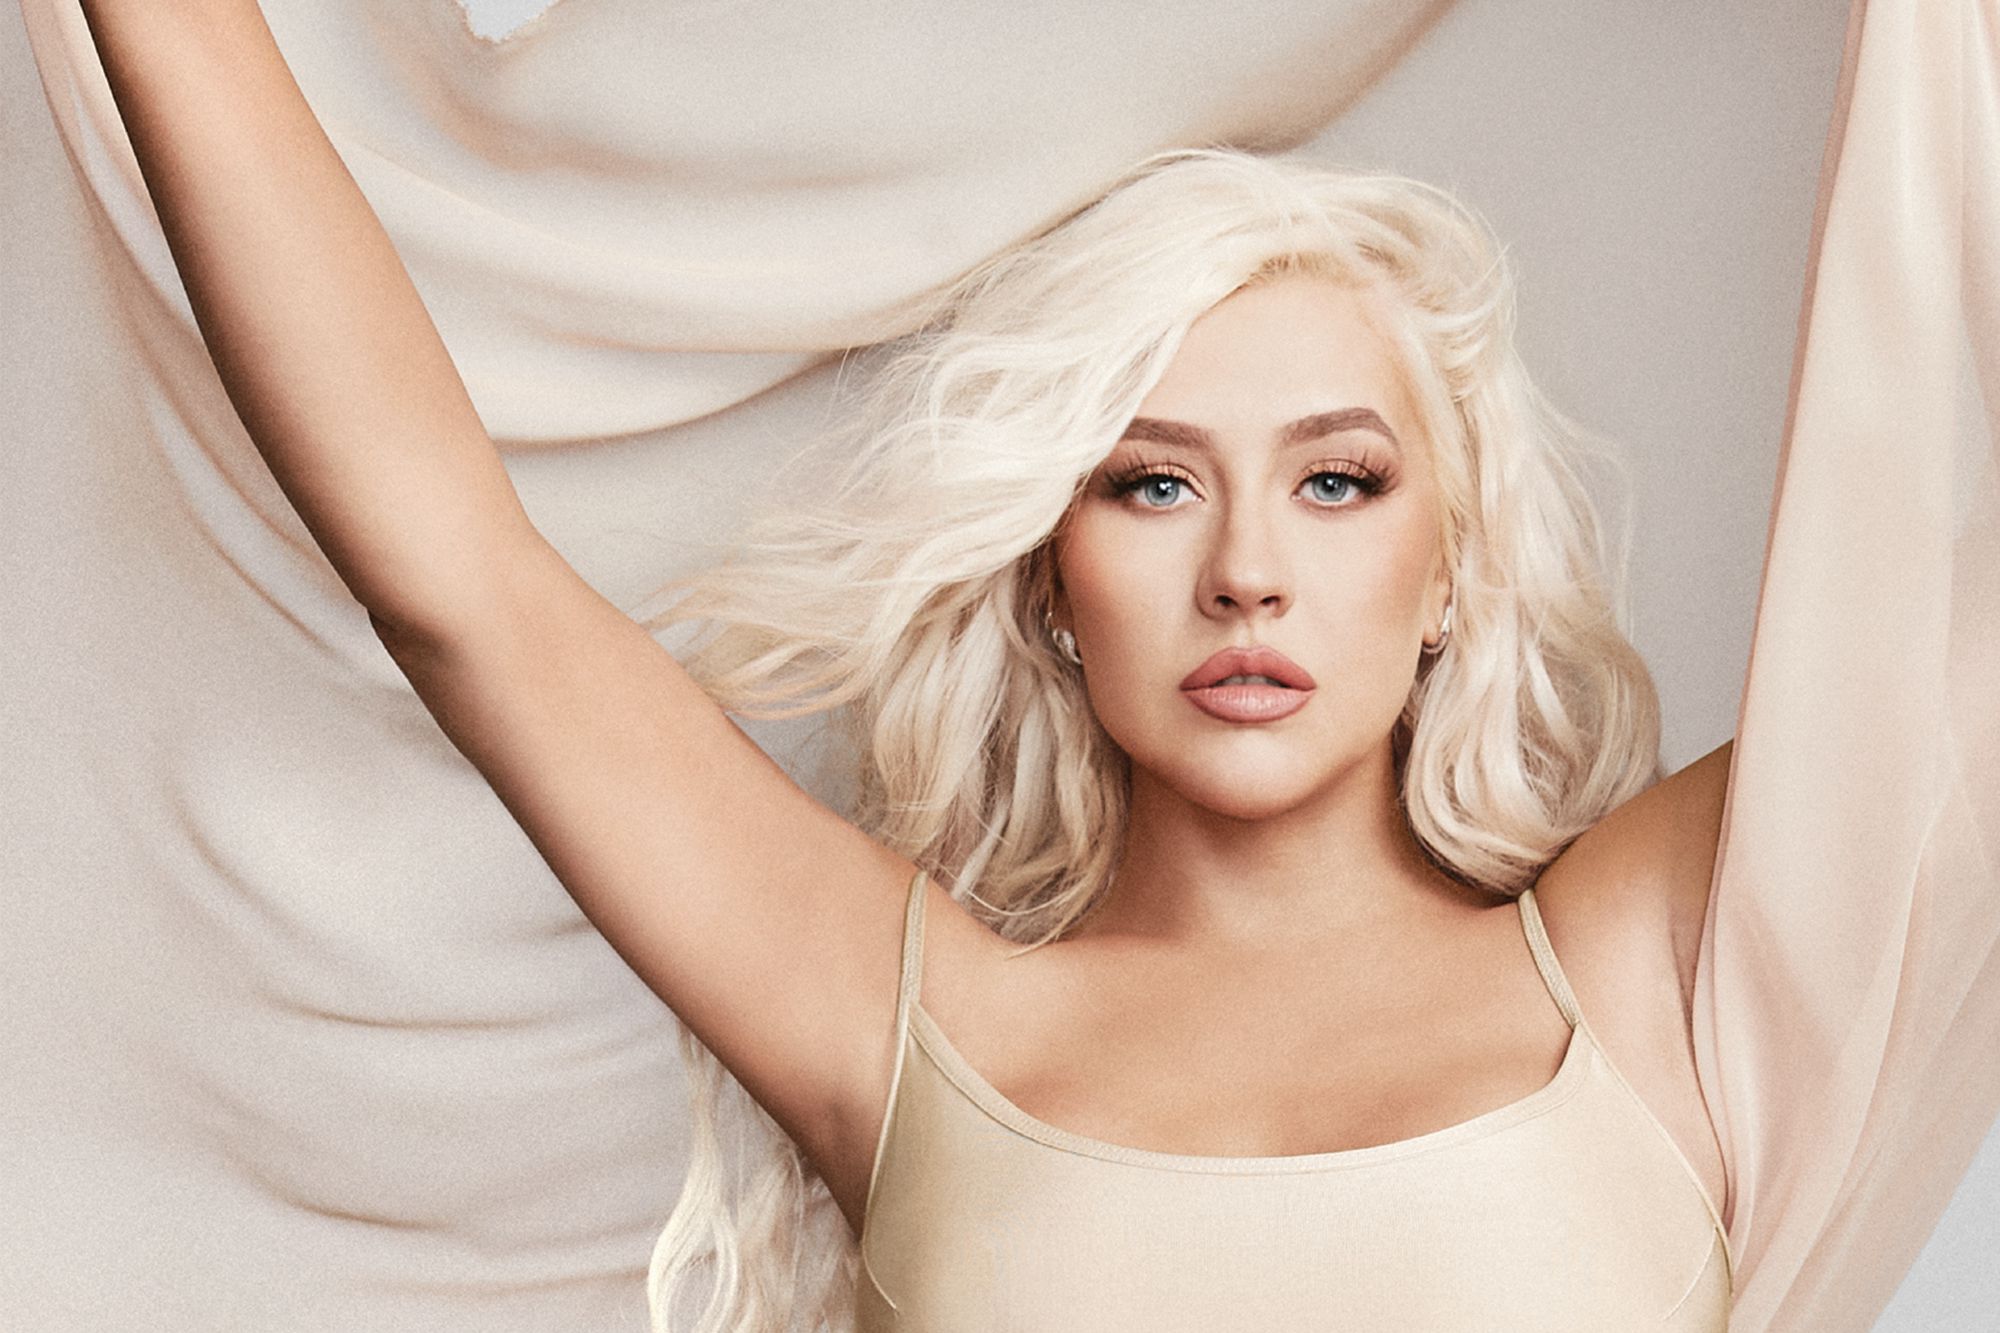 Who is Christina Aguilera?